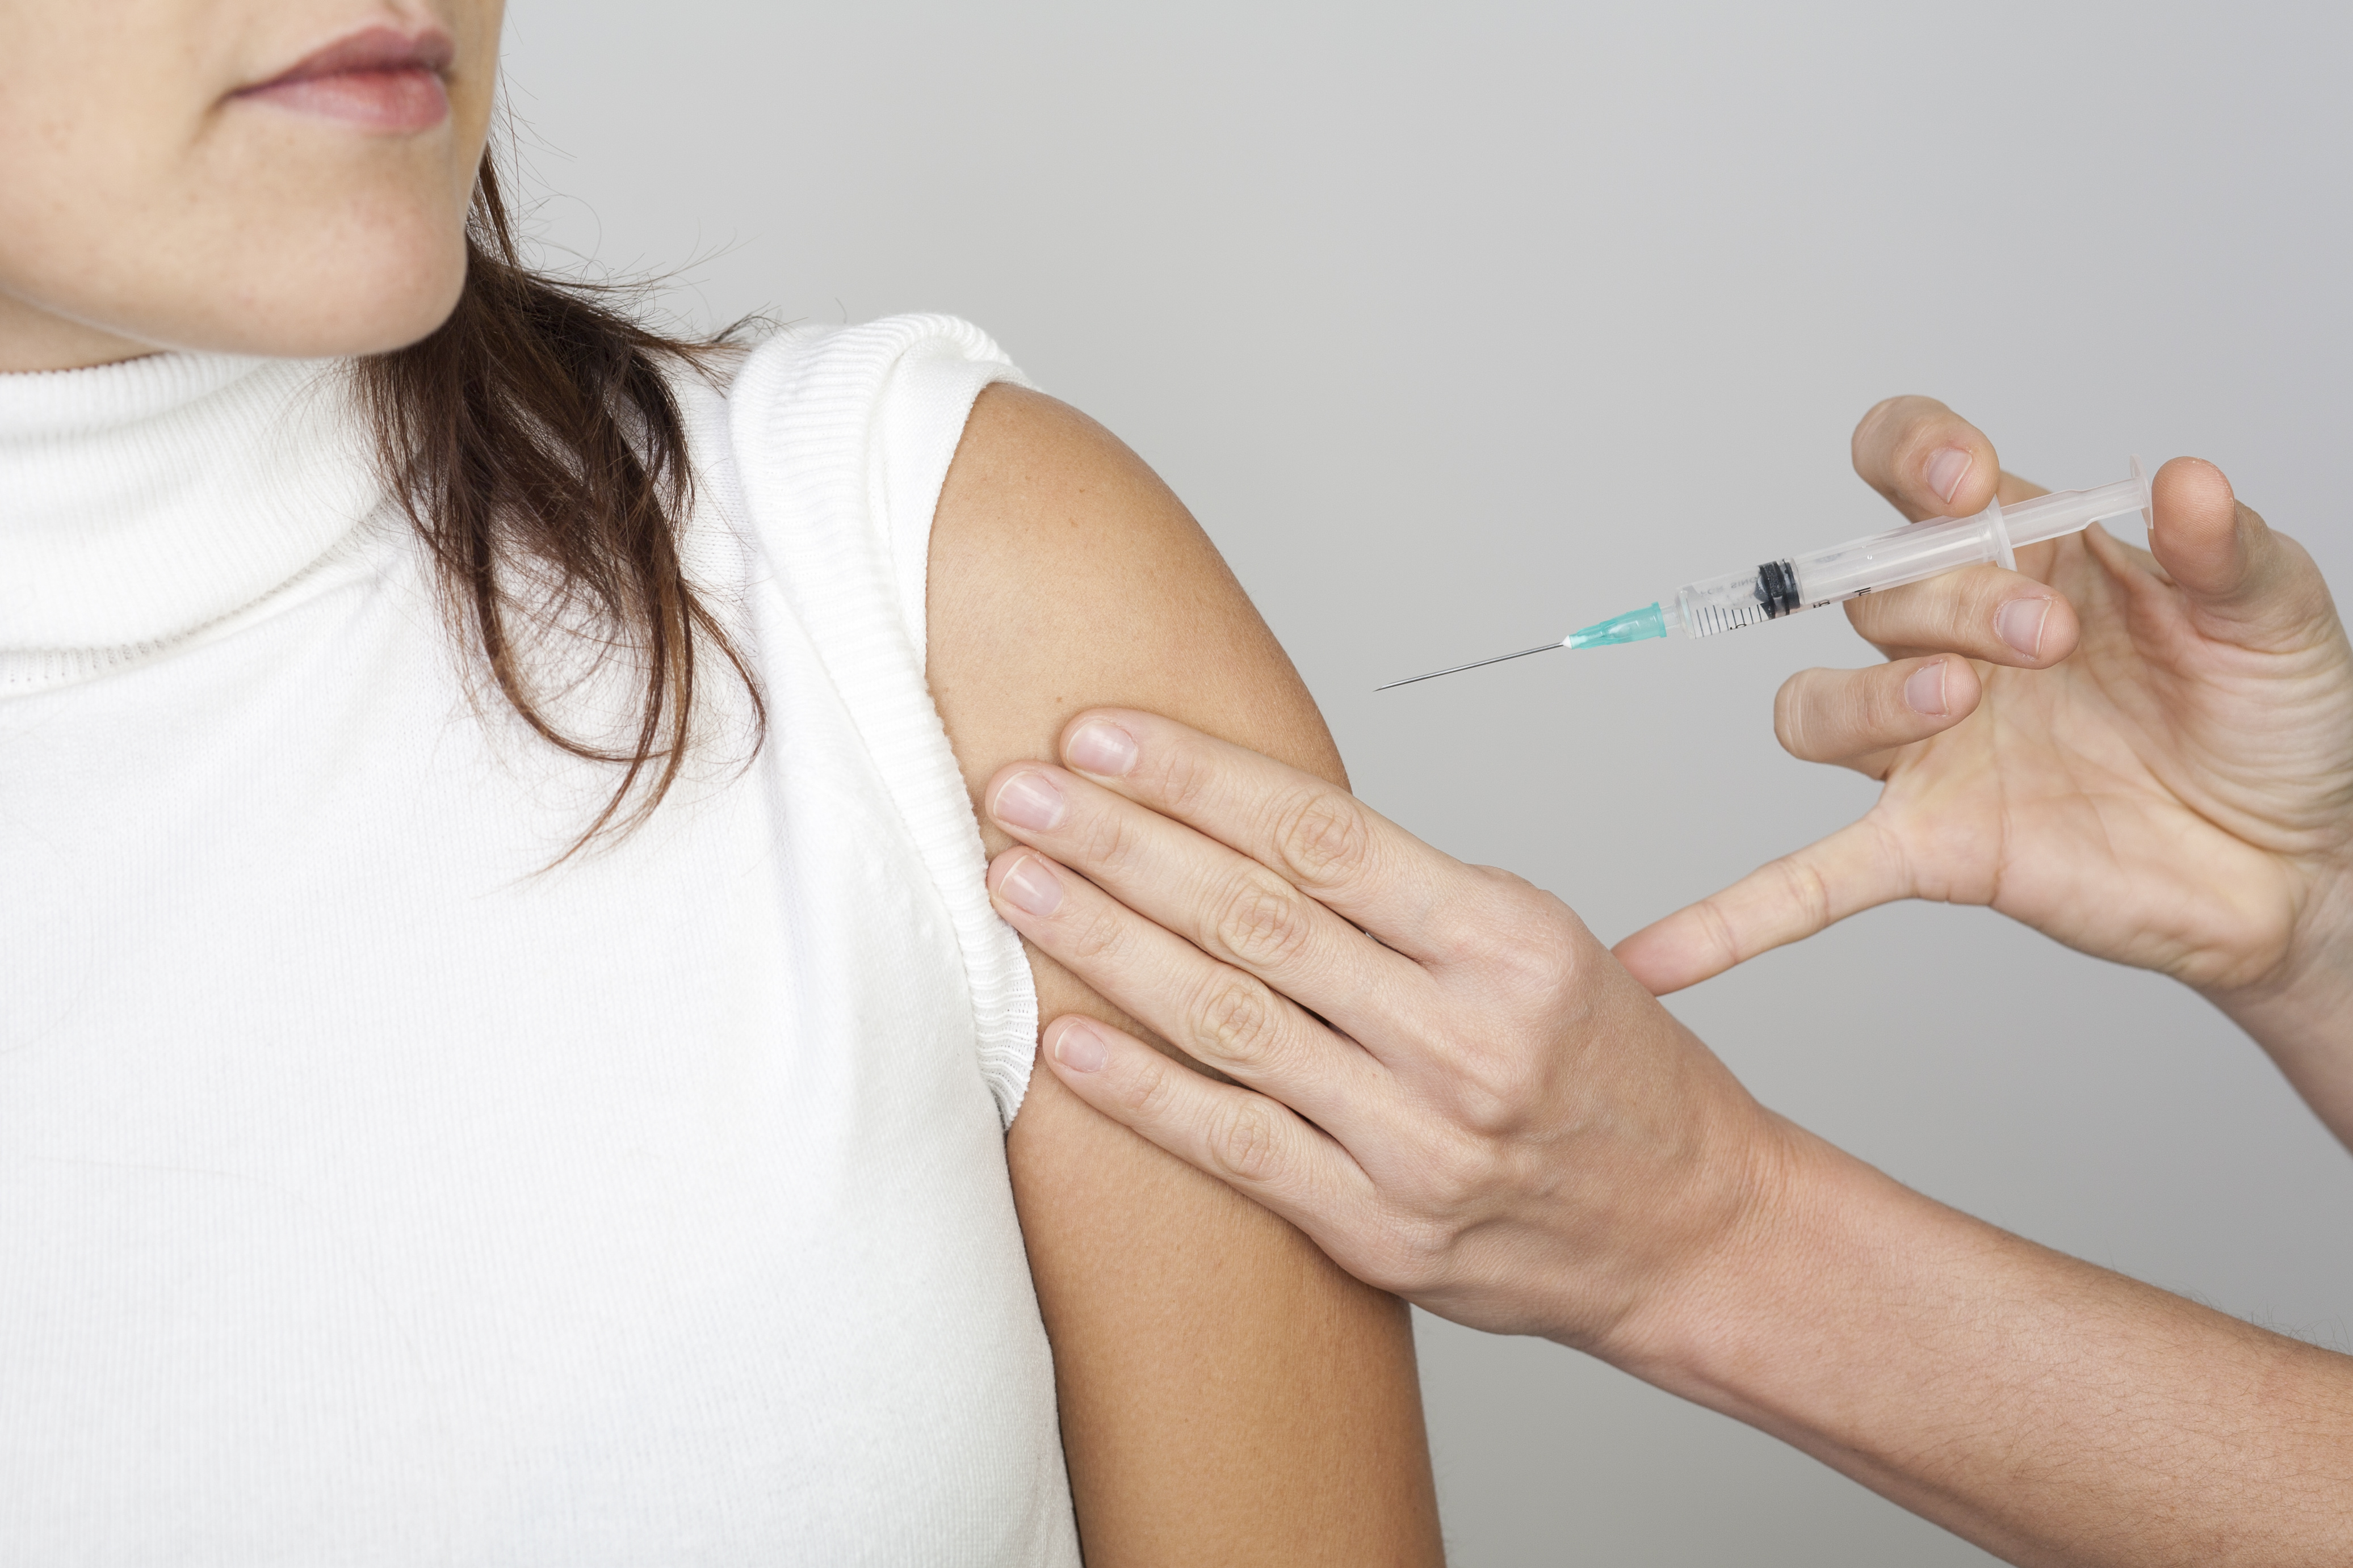 Vaccino contro papilloma virus controindicazioni, Vaccino papilloma virus e hpv